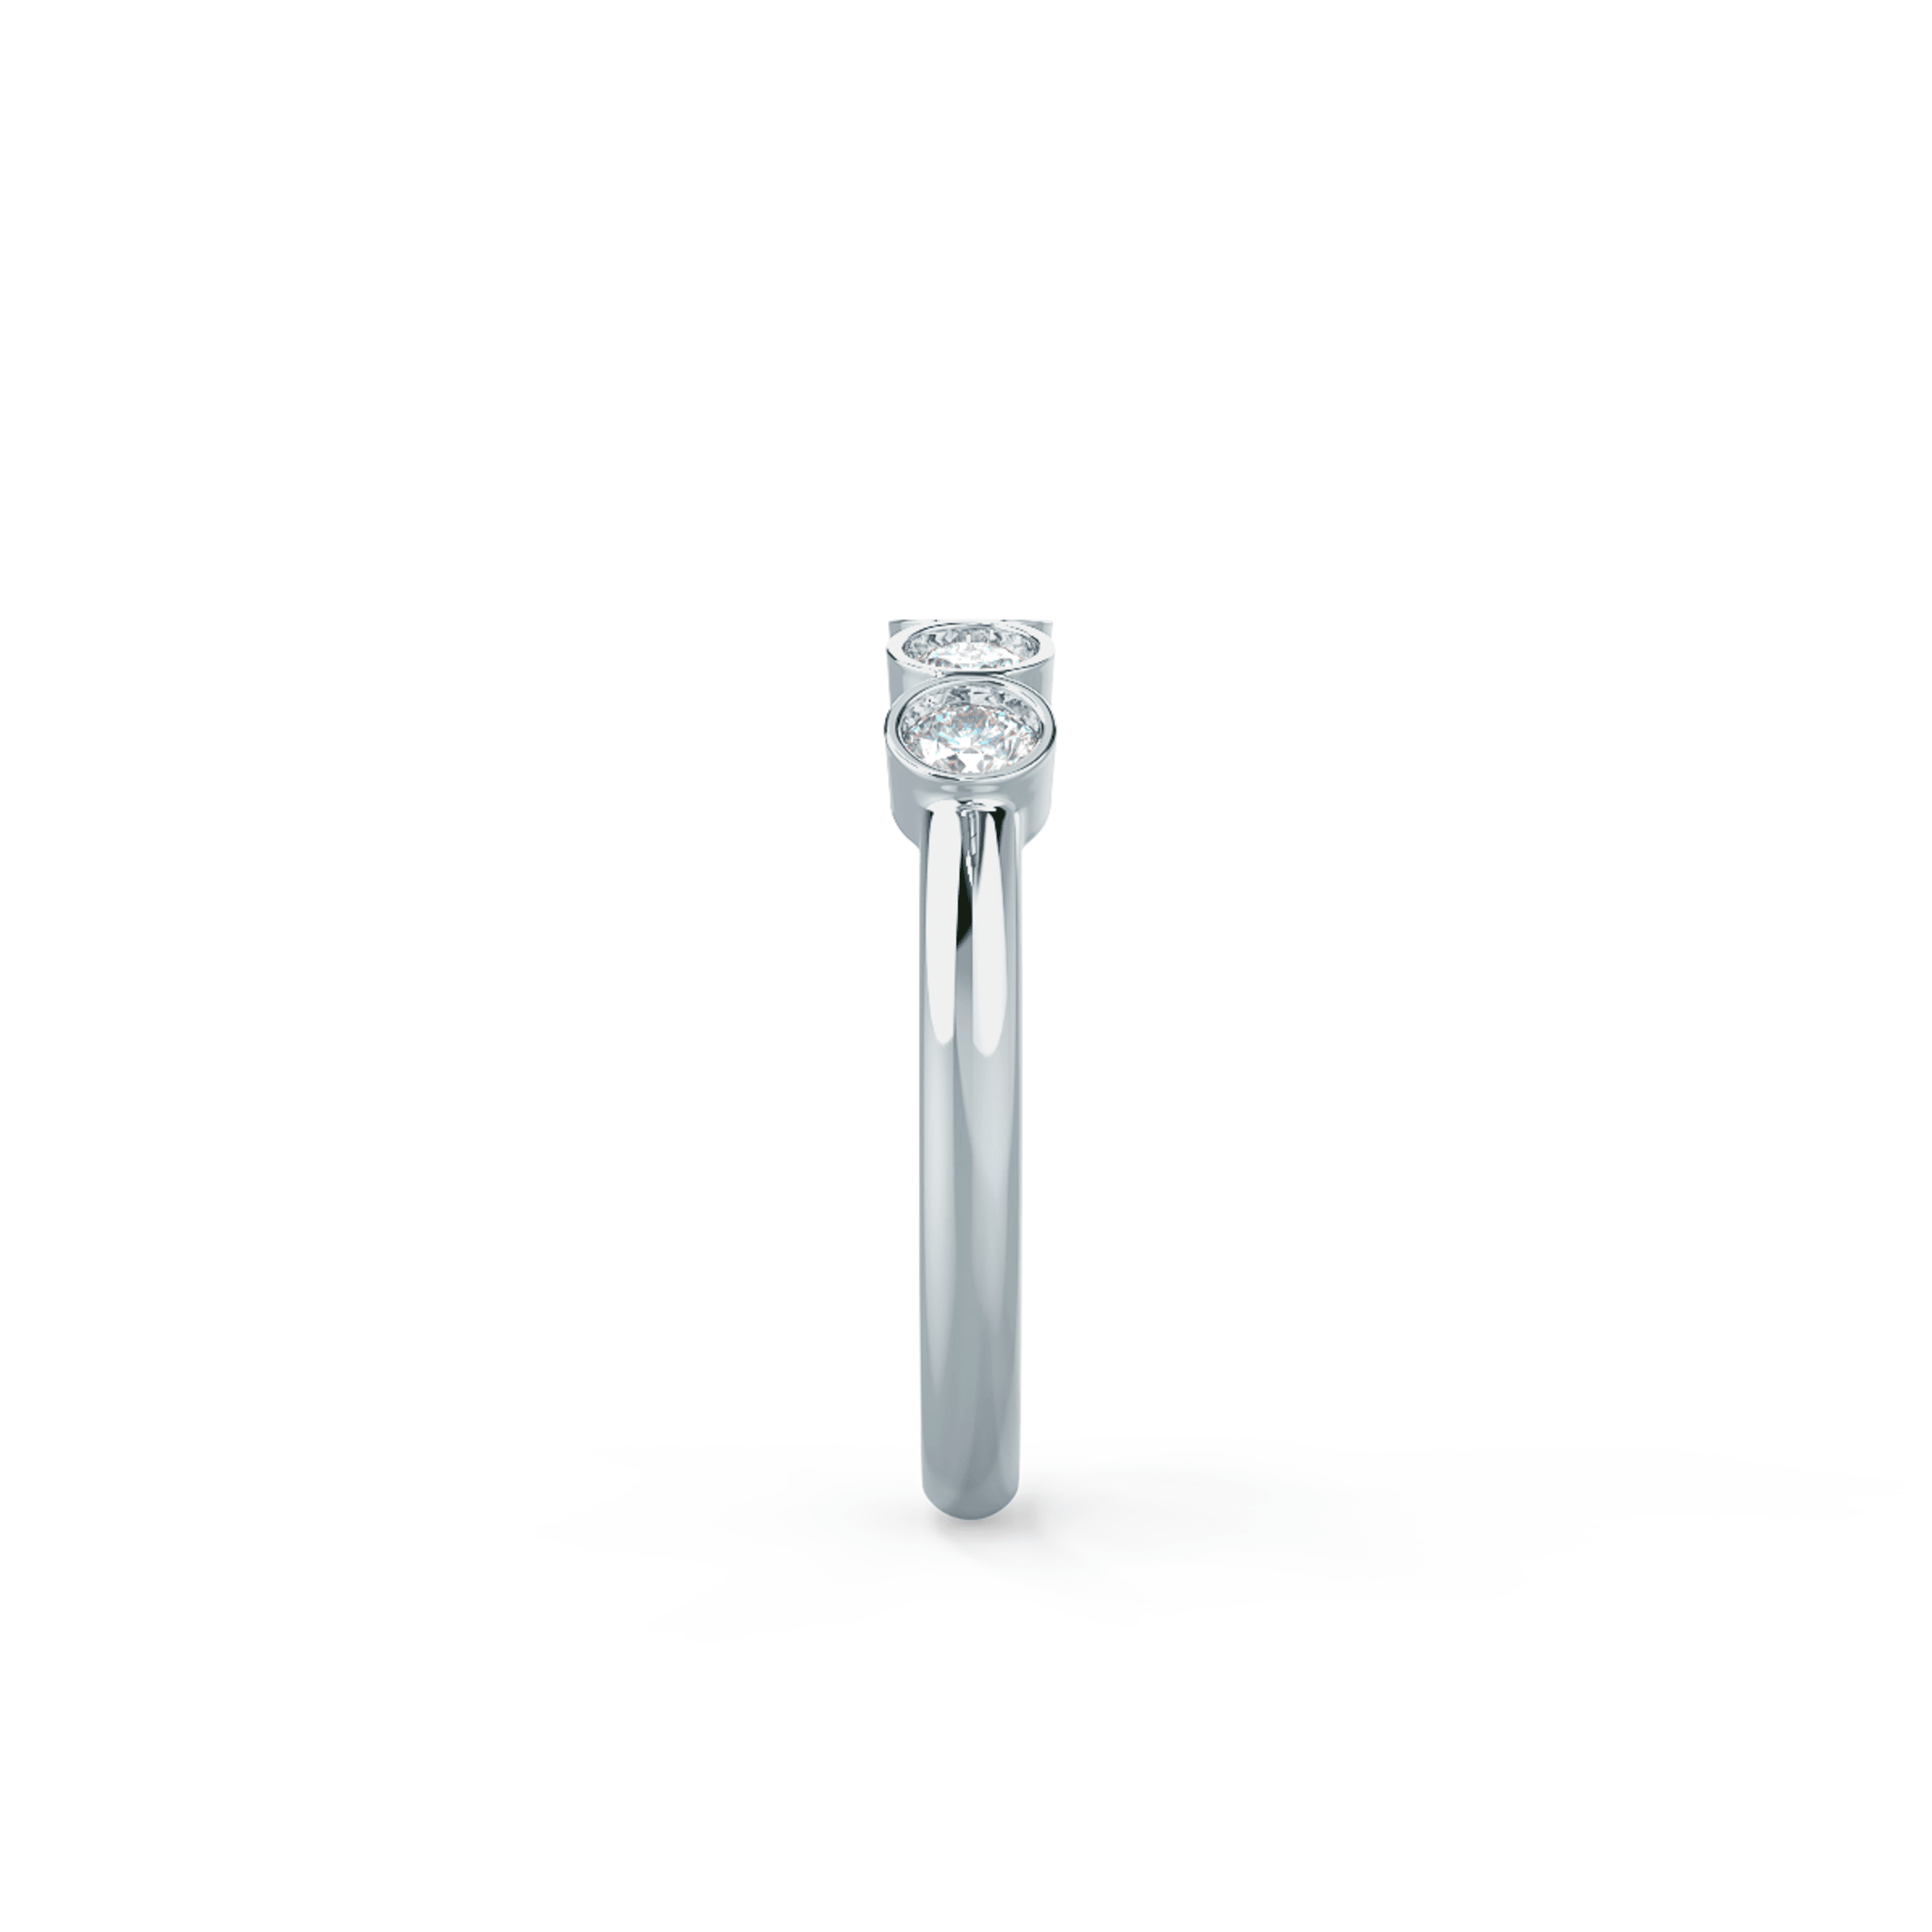 Exceptional Quality 0.7 Carat Round Brilliant Diamonds set in 18 Karat White Gold Bezel Five Stone (Side View)